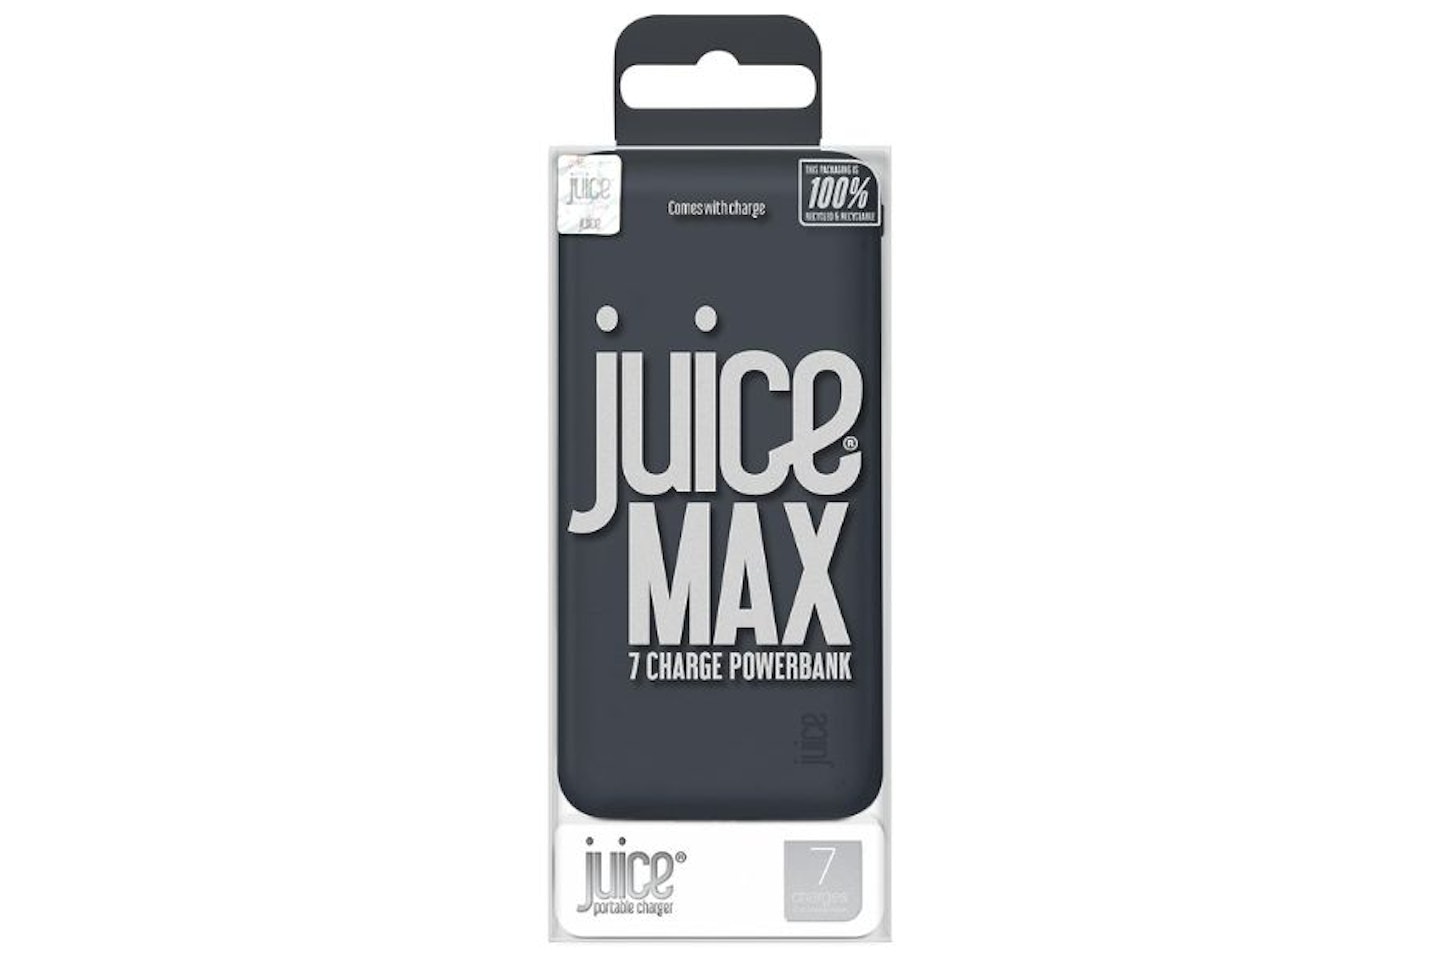 Juice MAX Power Bank